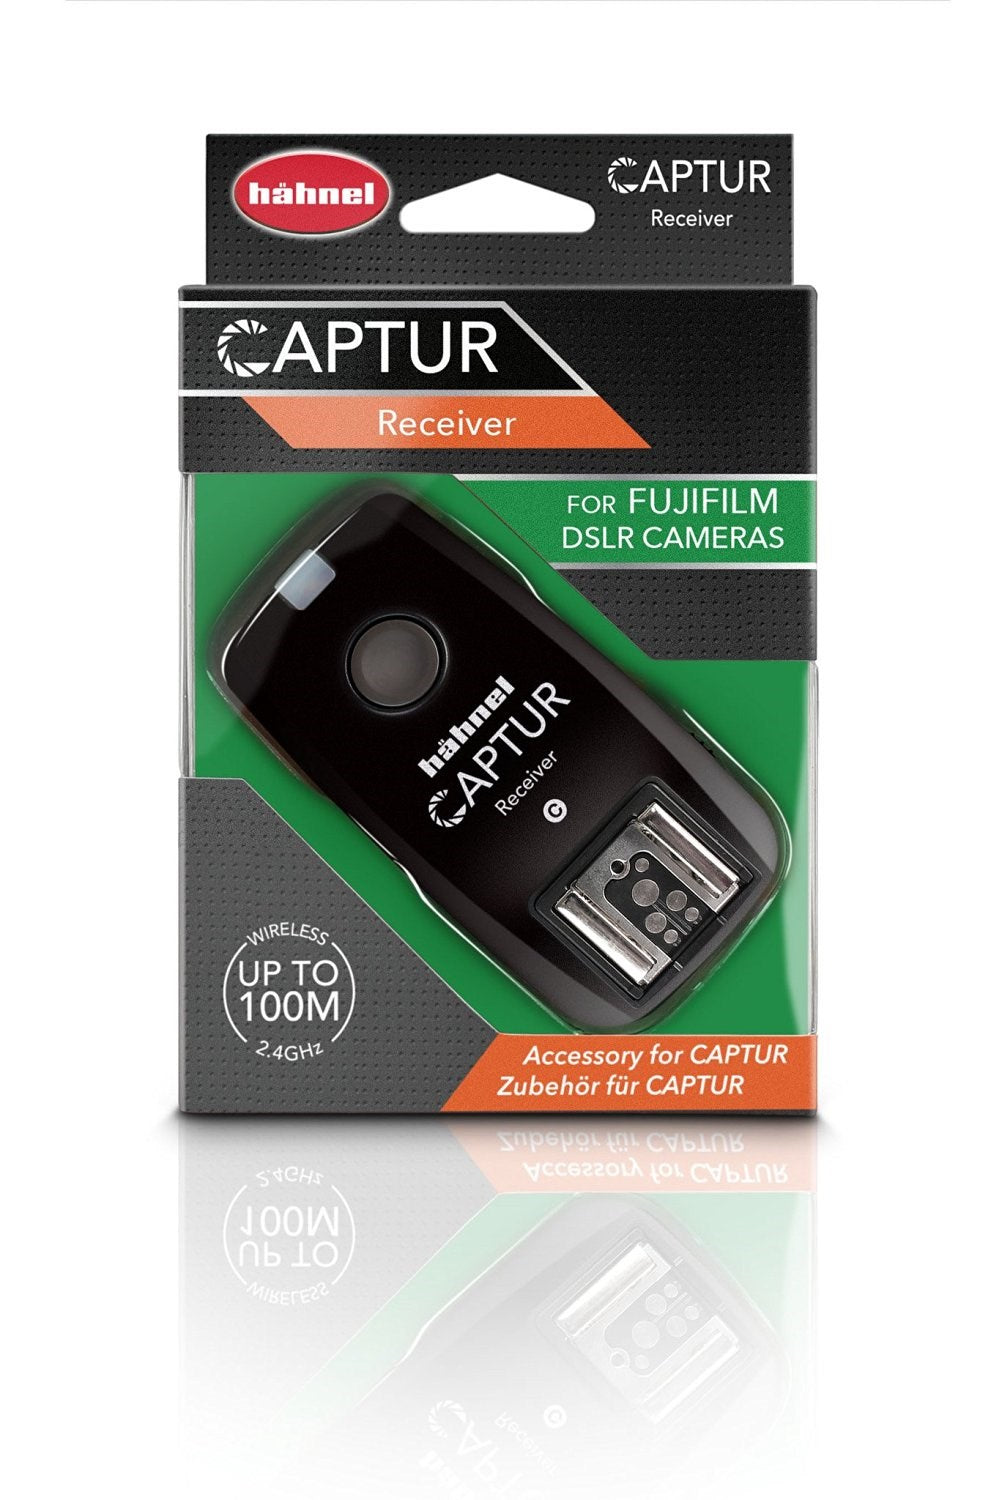 Product Image of Hahnel Captur receiver for Fujifilm